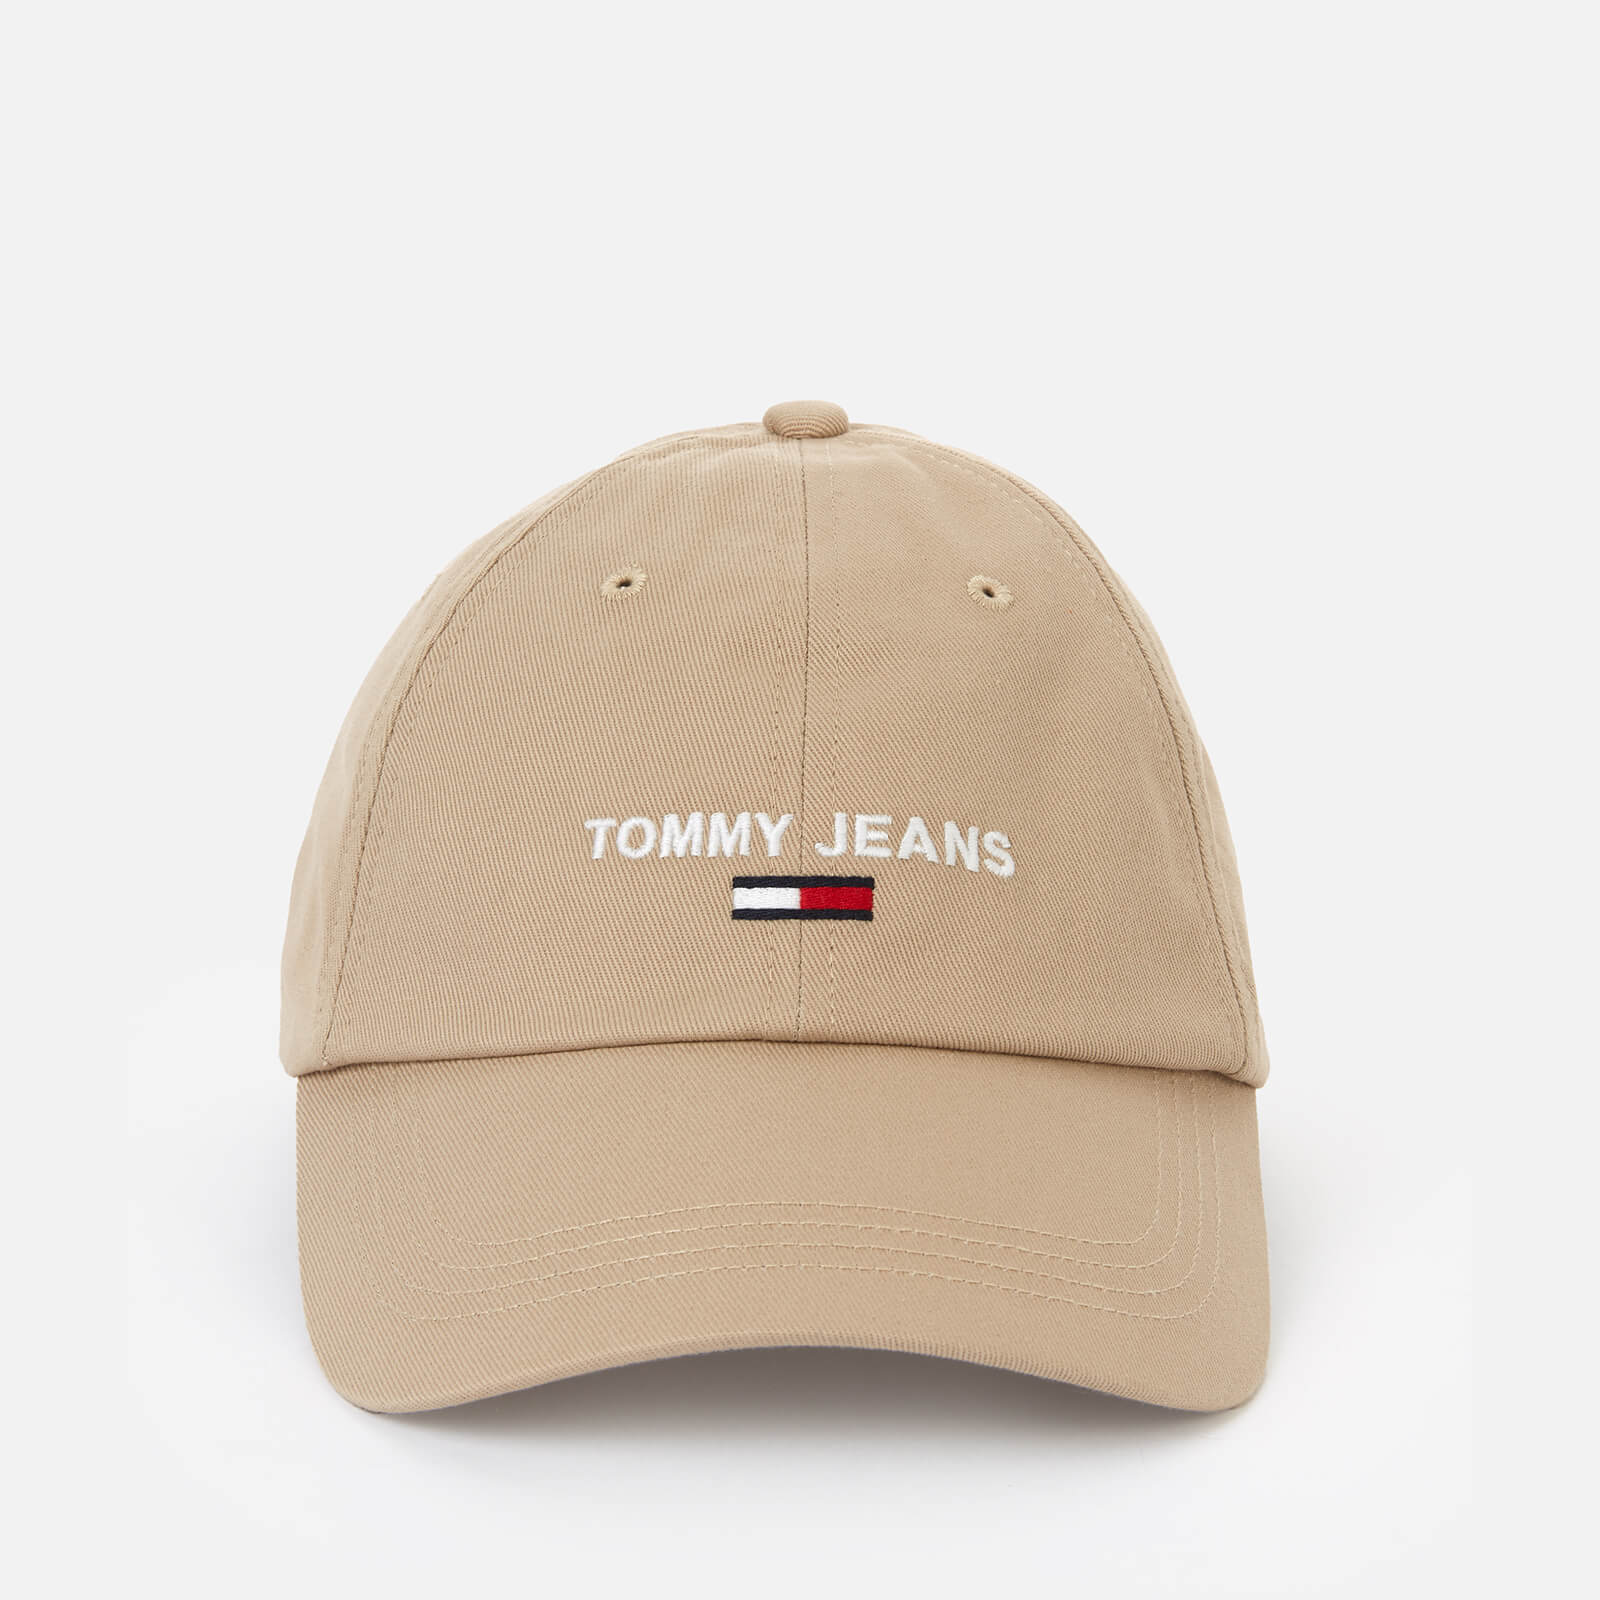 Tommy Jeans Men's Sport Cap - Soft Beige